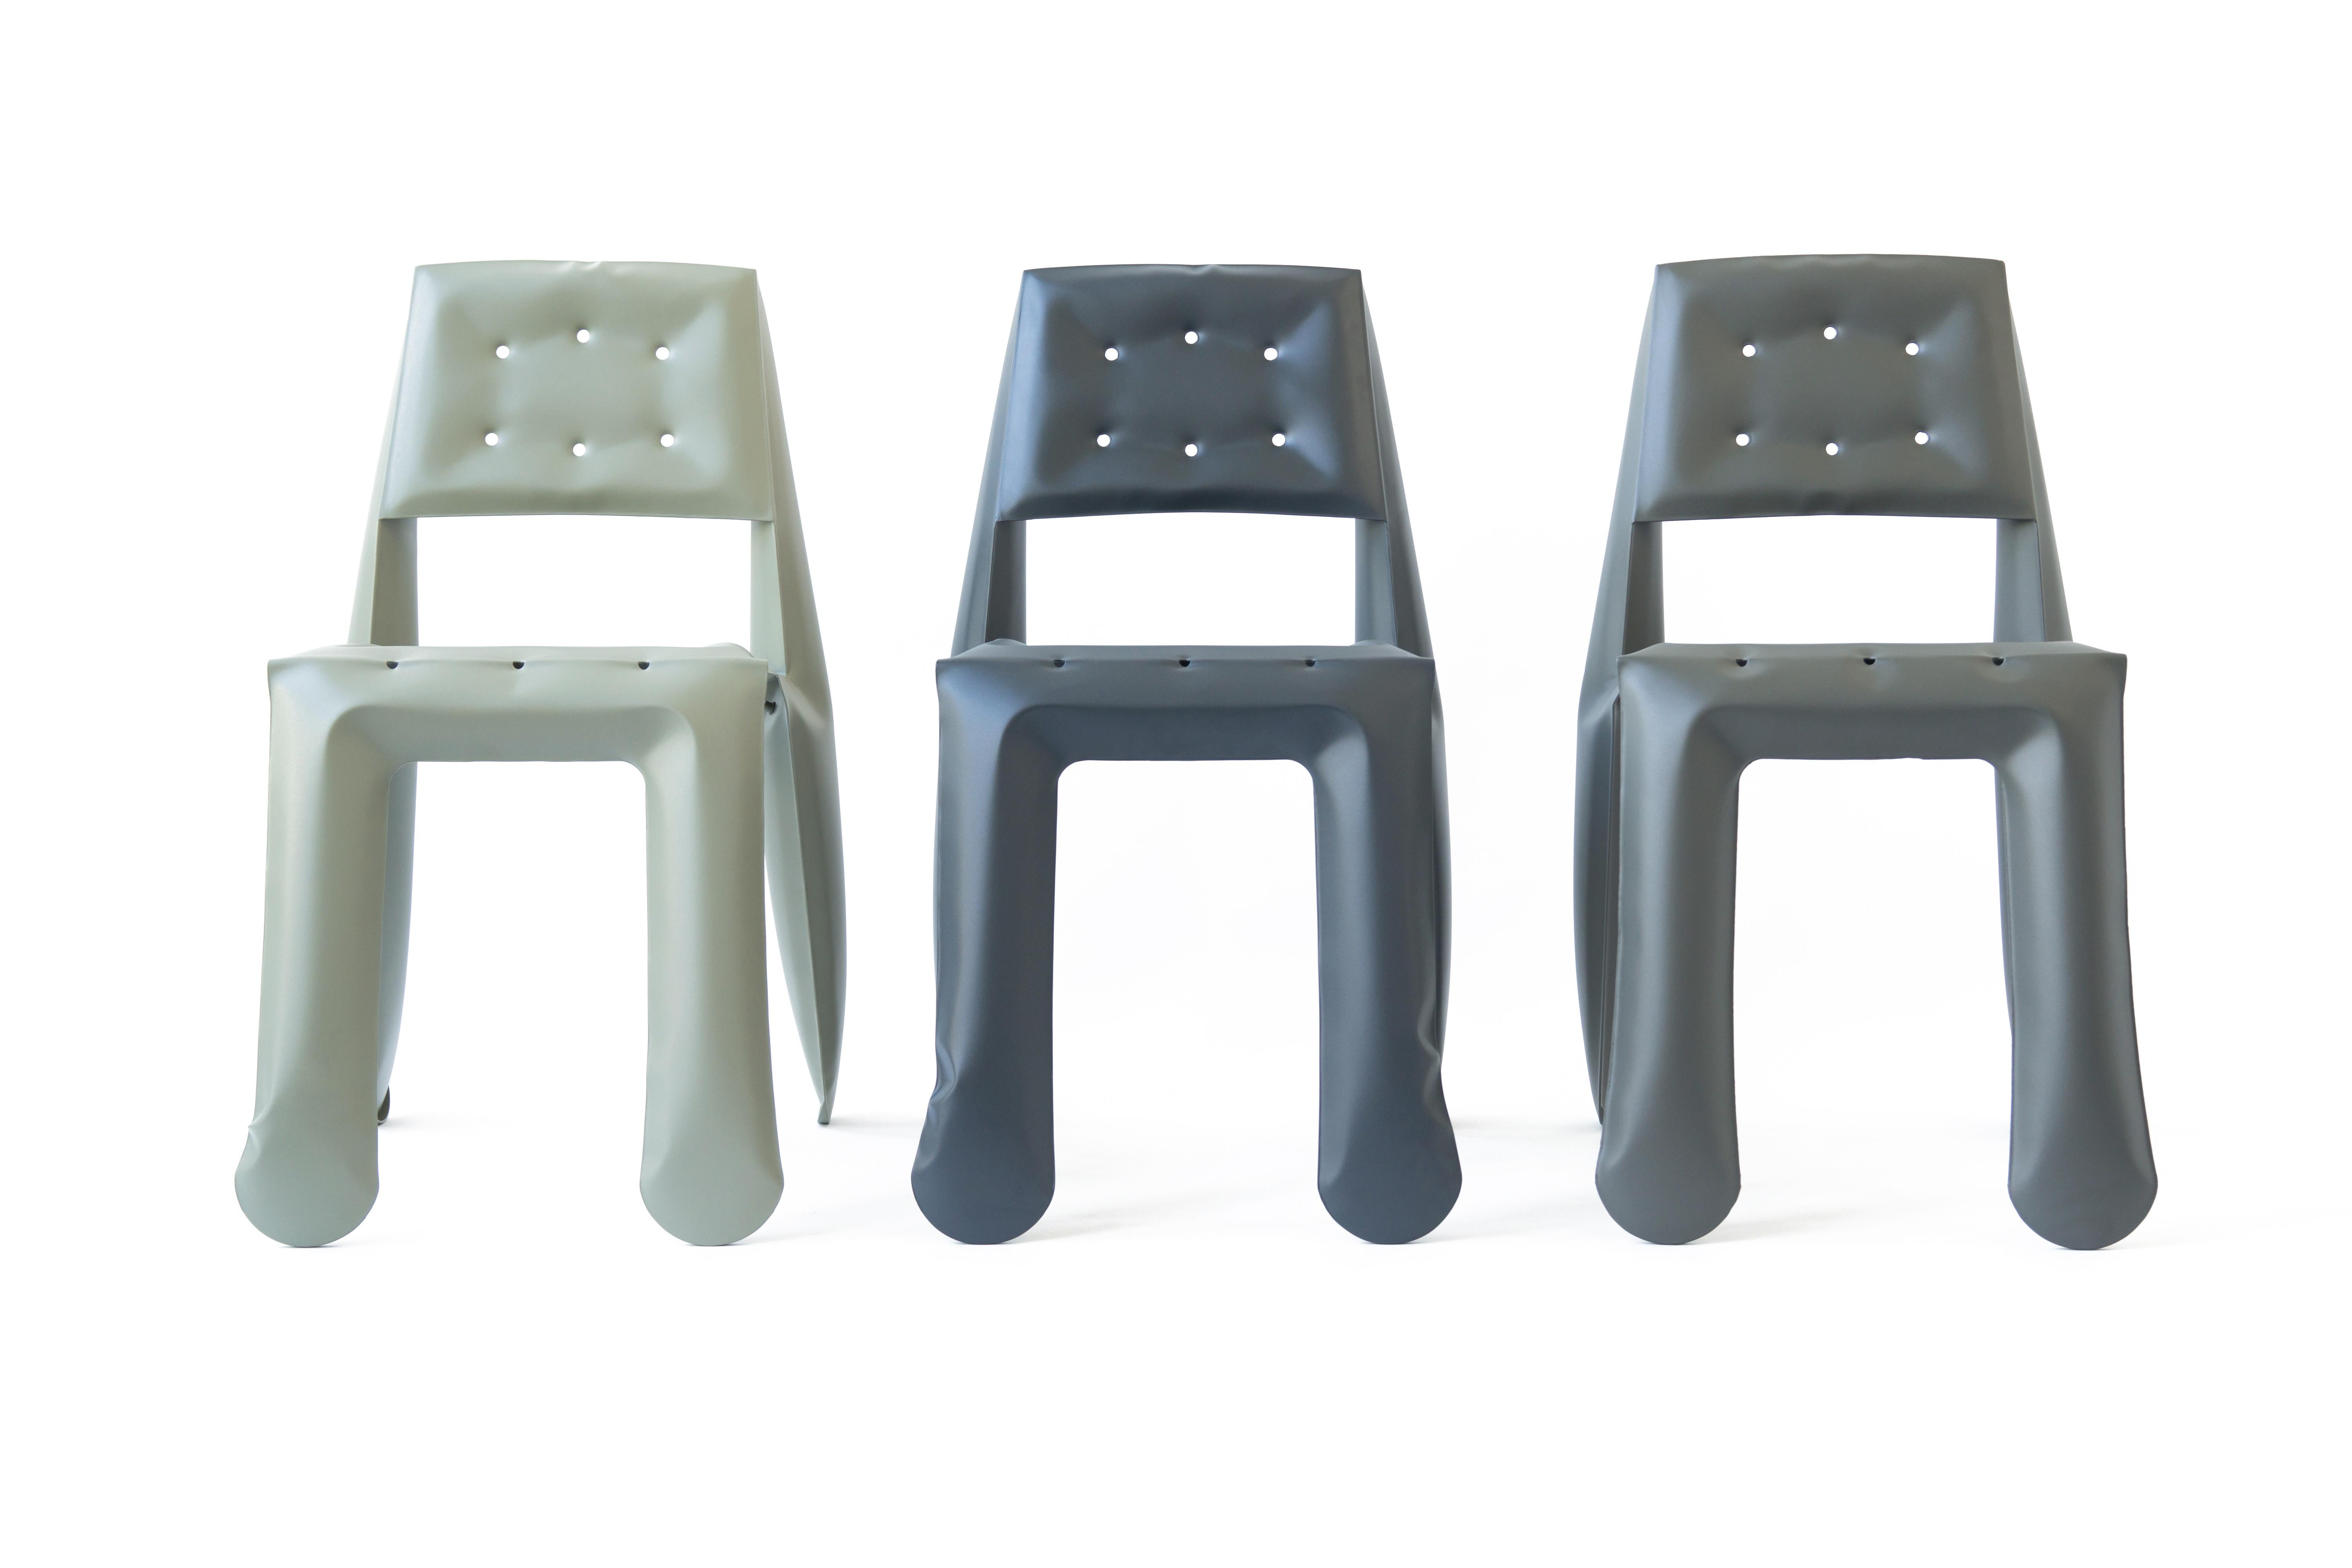 Powder-Coated Black Carbon Steel Chippensteel 0.5 Sculptural Chair by Zieta